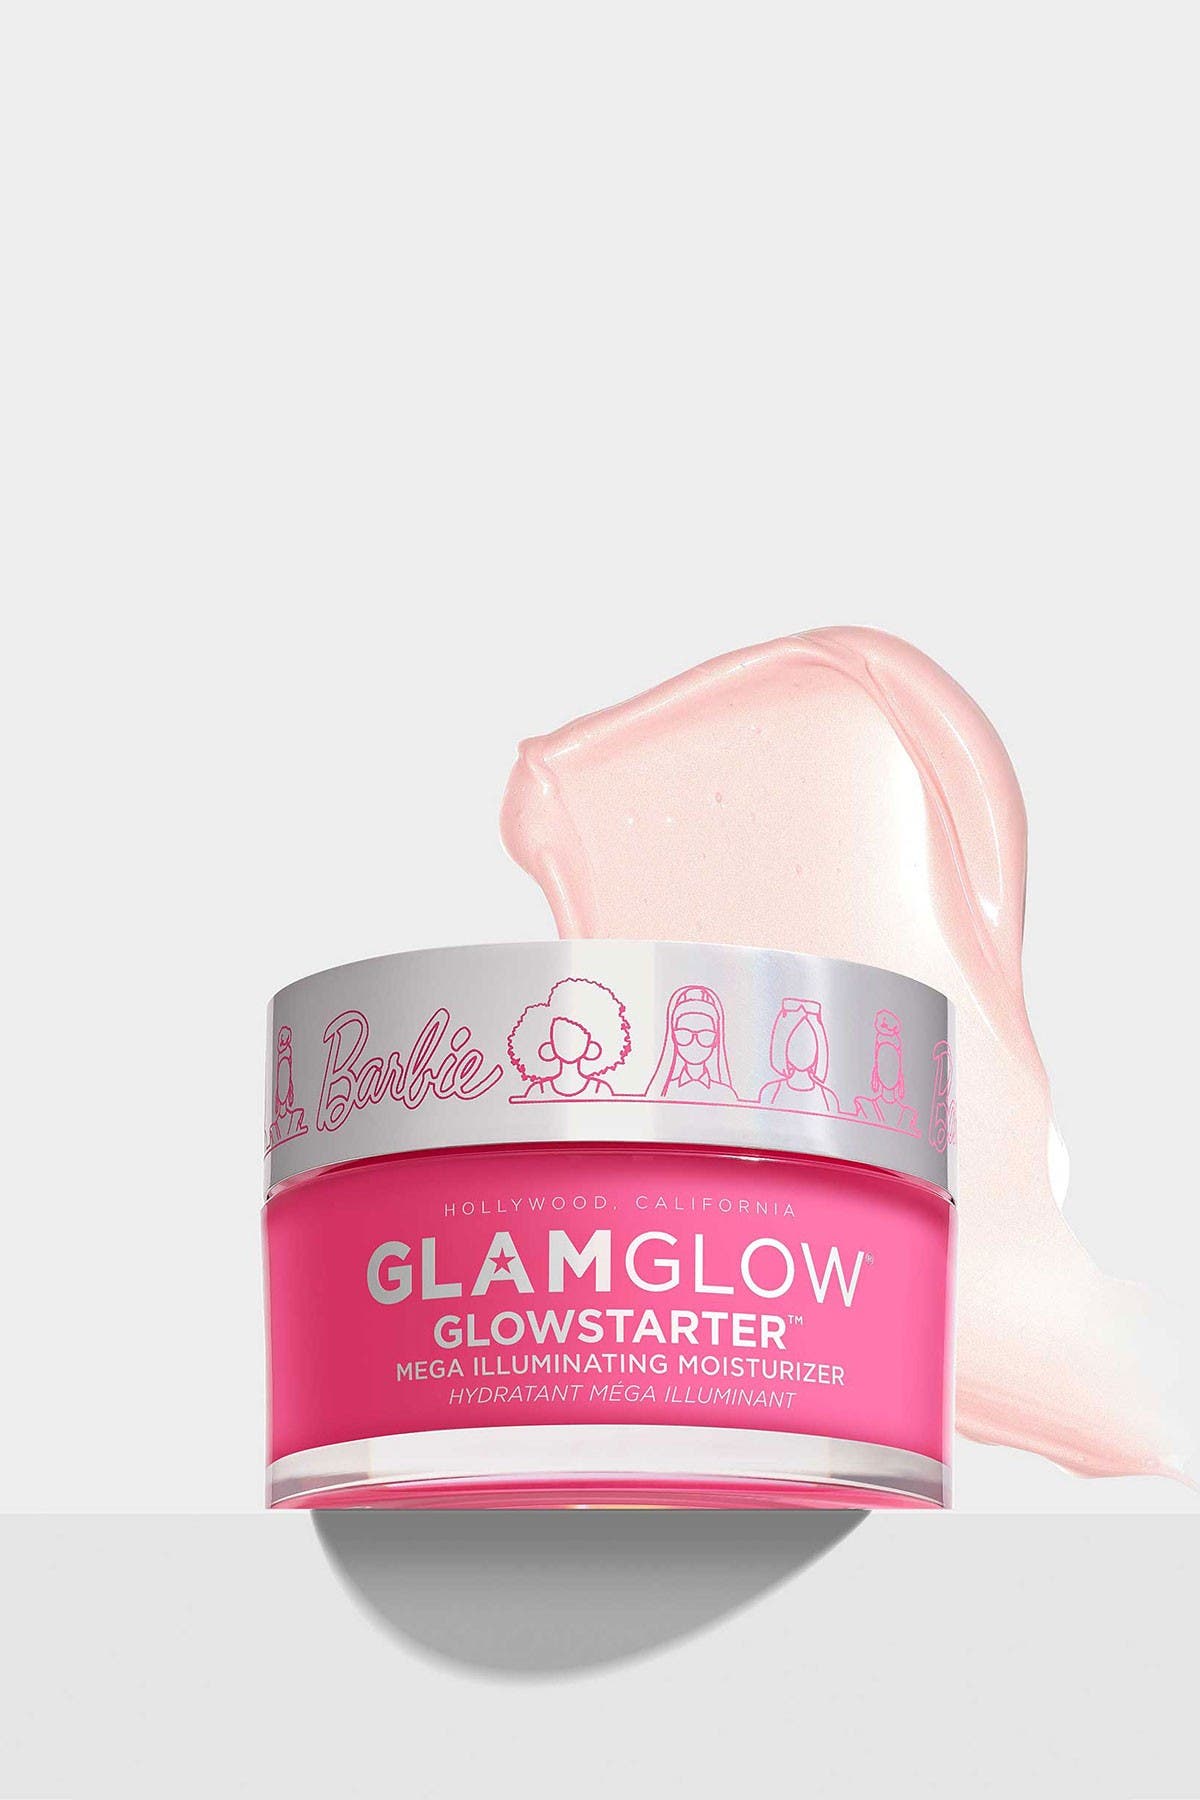 Glamglow Limited Edition Glowstarter&trade; Mega-illuminating Moisturizer